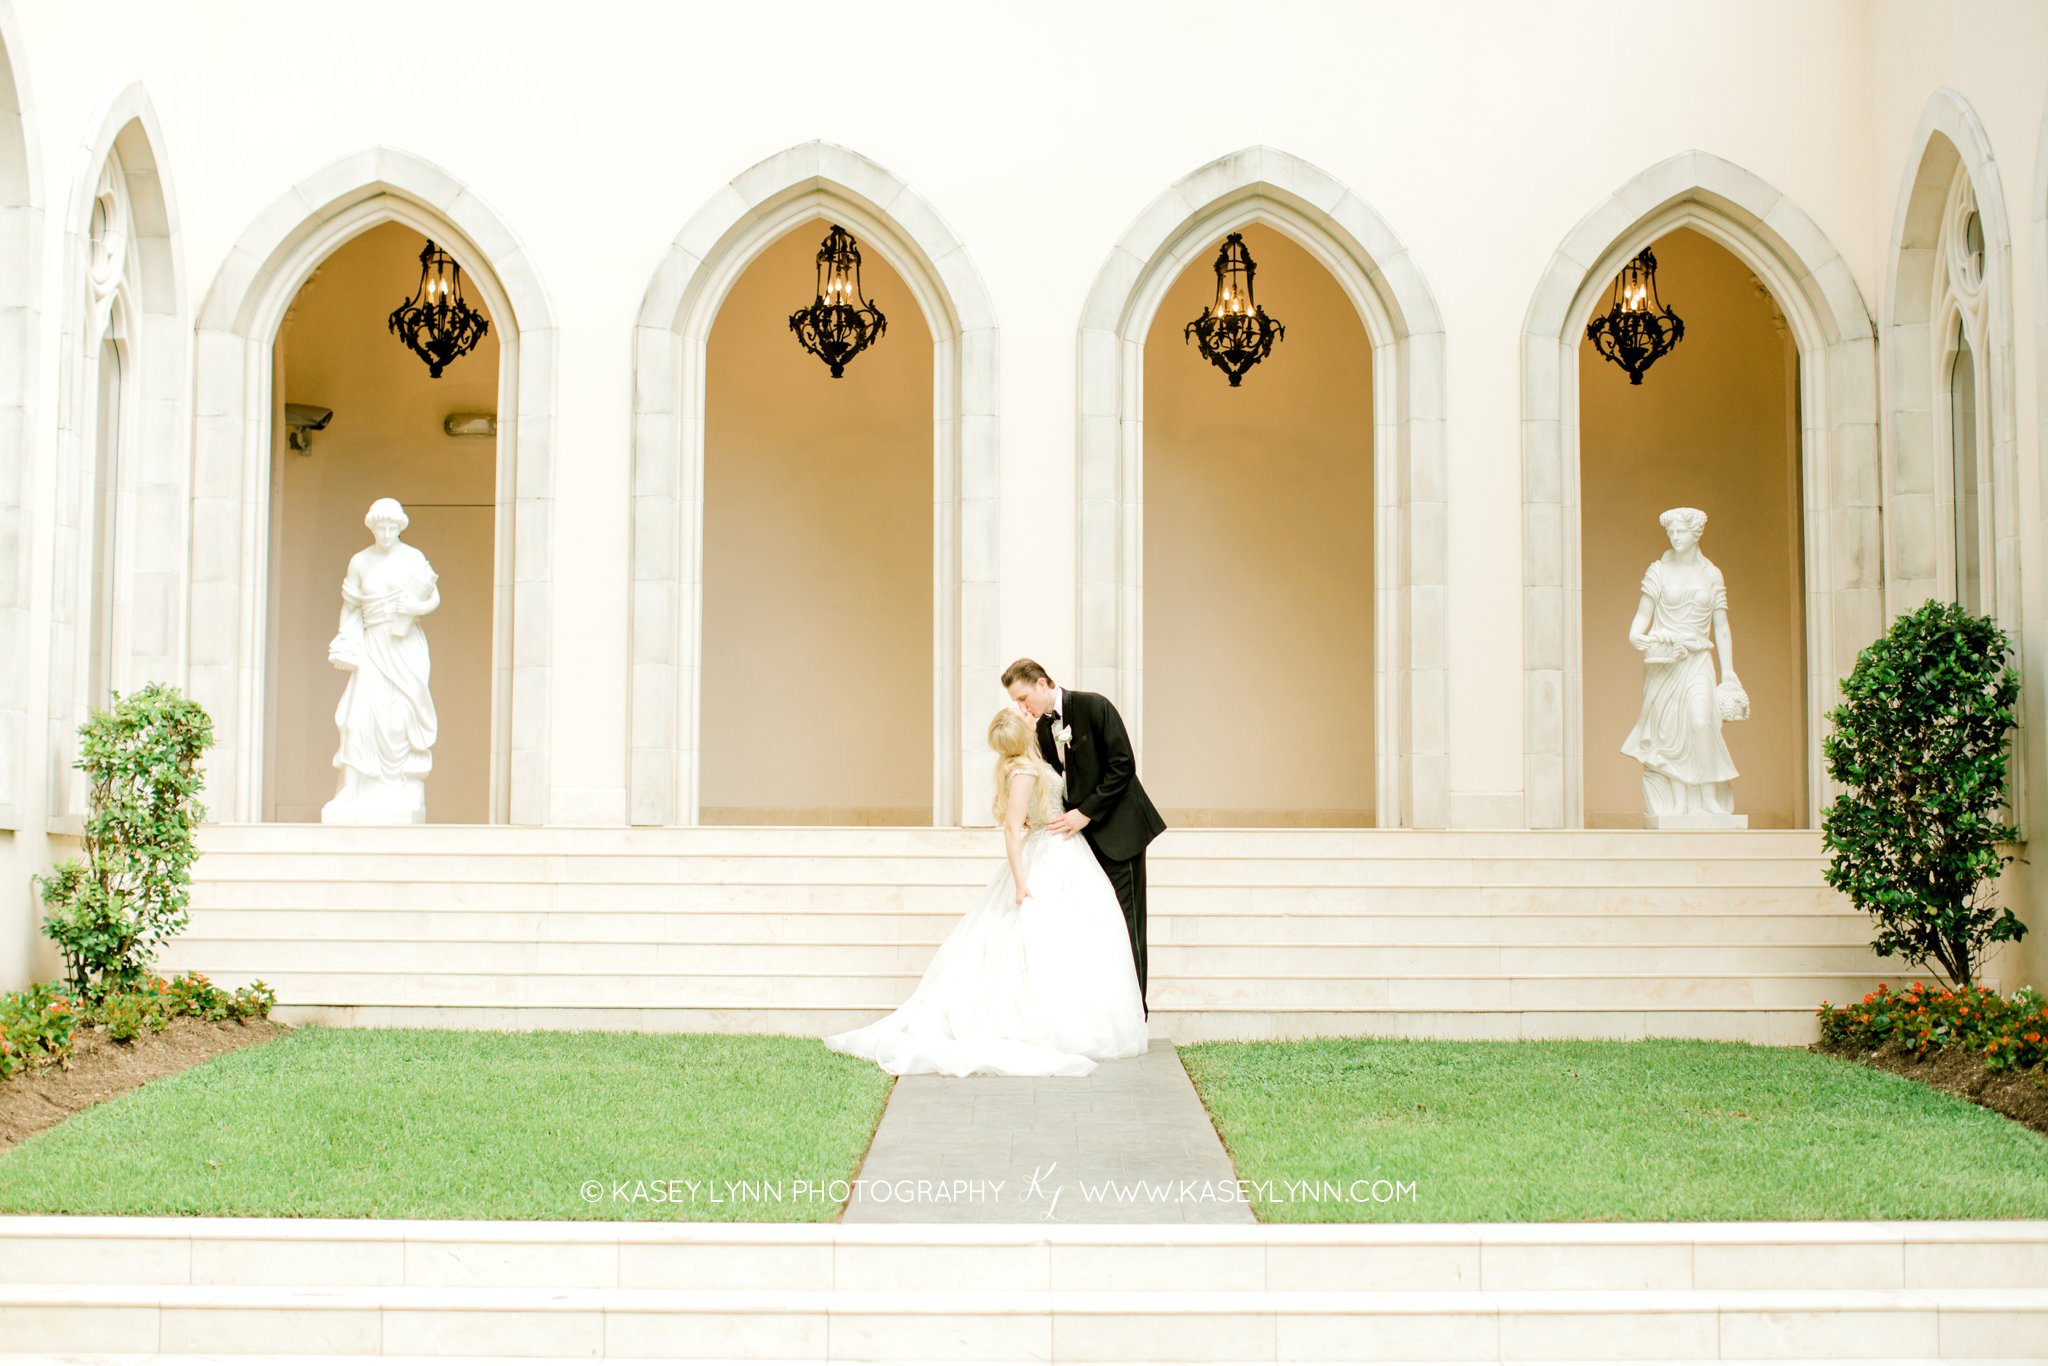 Chateau Cocomar Wedding Photographer / Kasey Lynn Photography